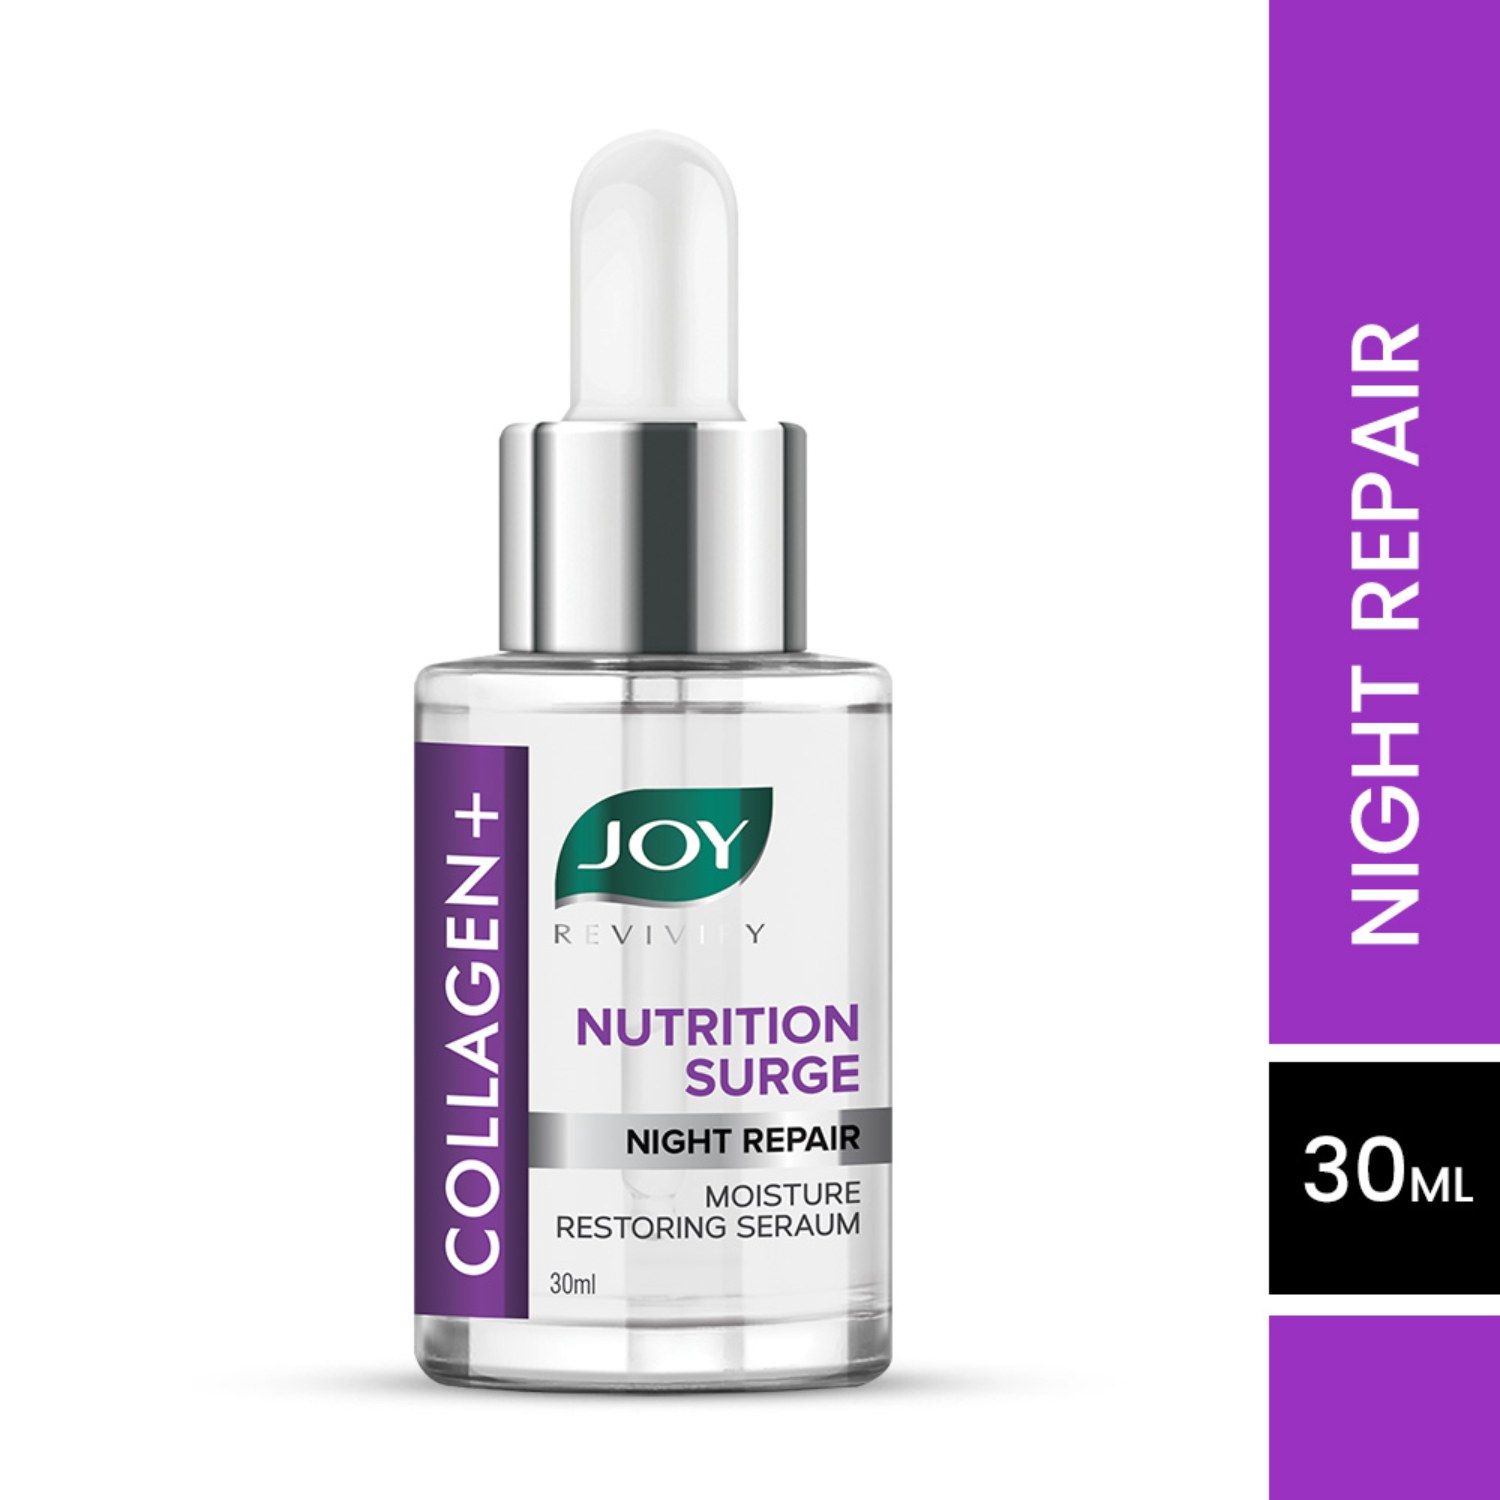 Buy Joy Revivify Collagen+ Nutrition Surge Night Repair Moisture Restoring Face Serum 30ml - Purplle